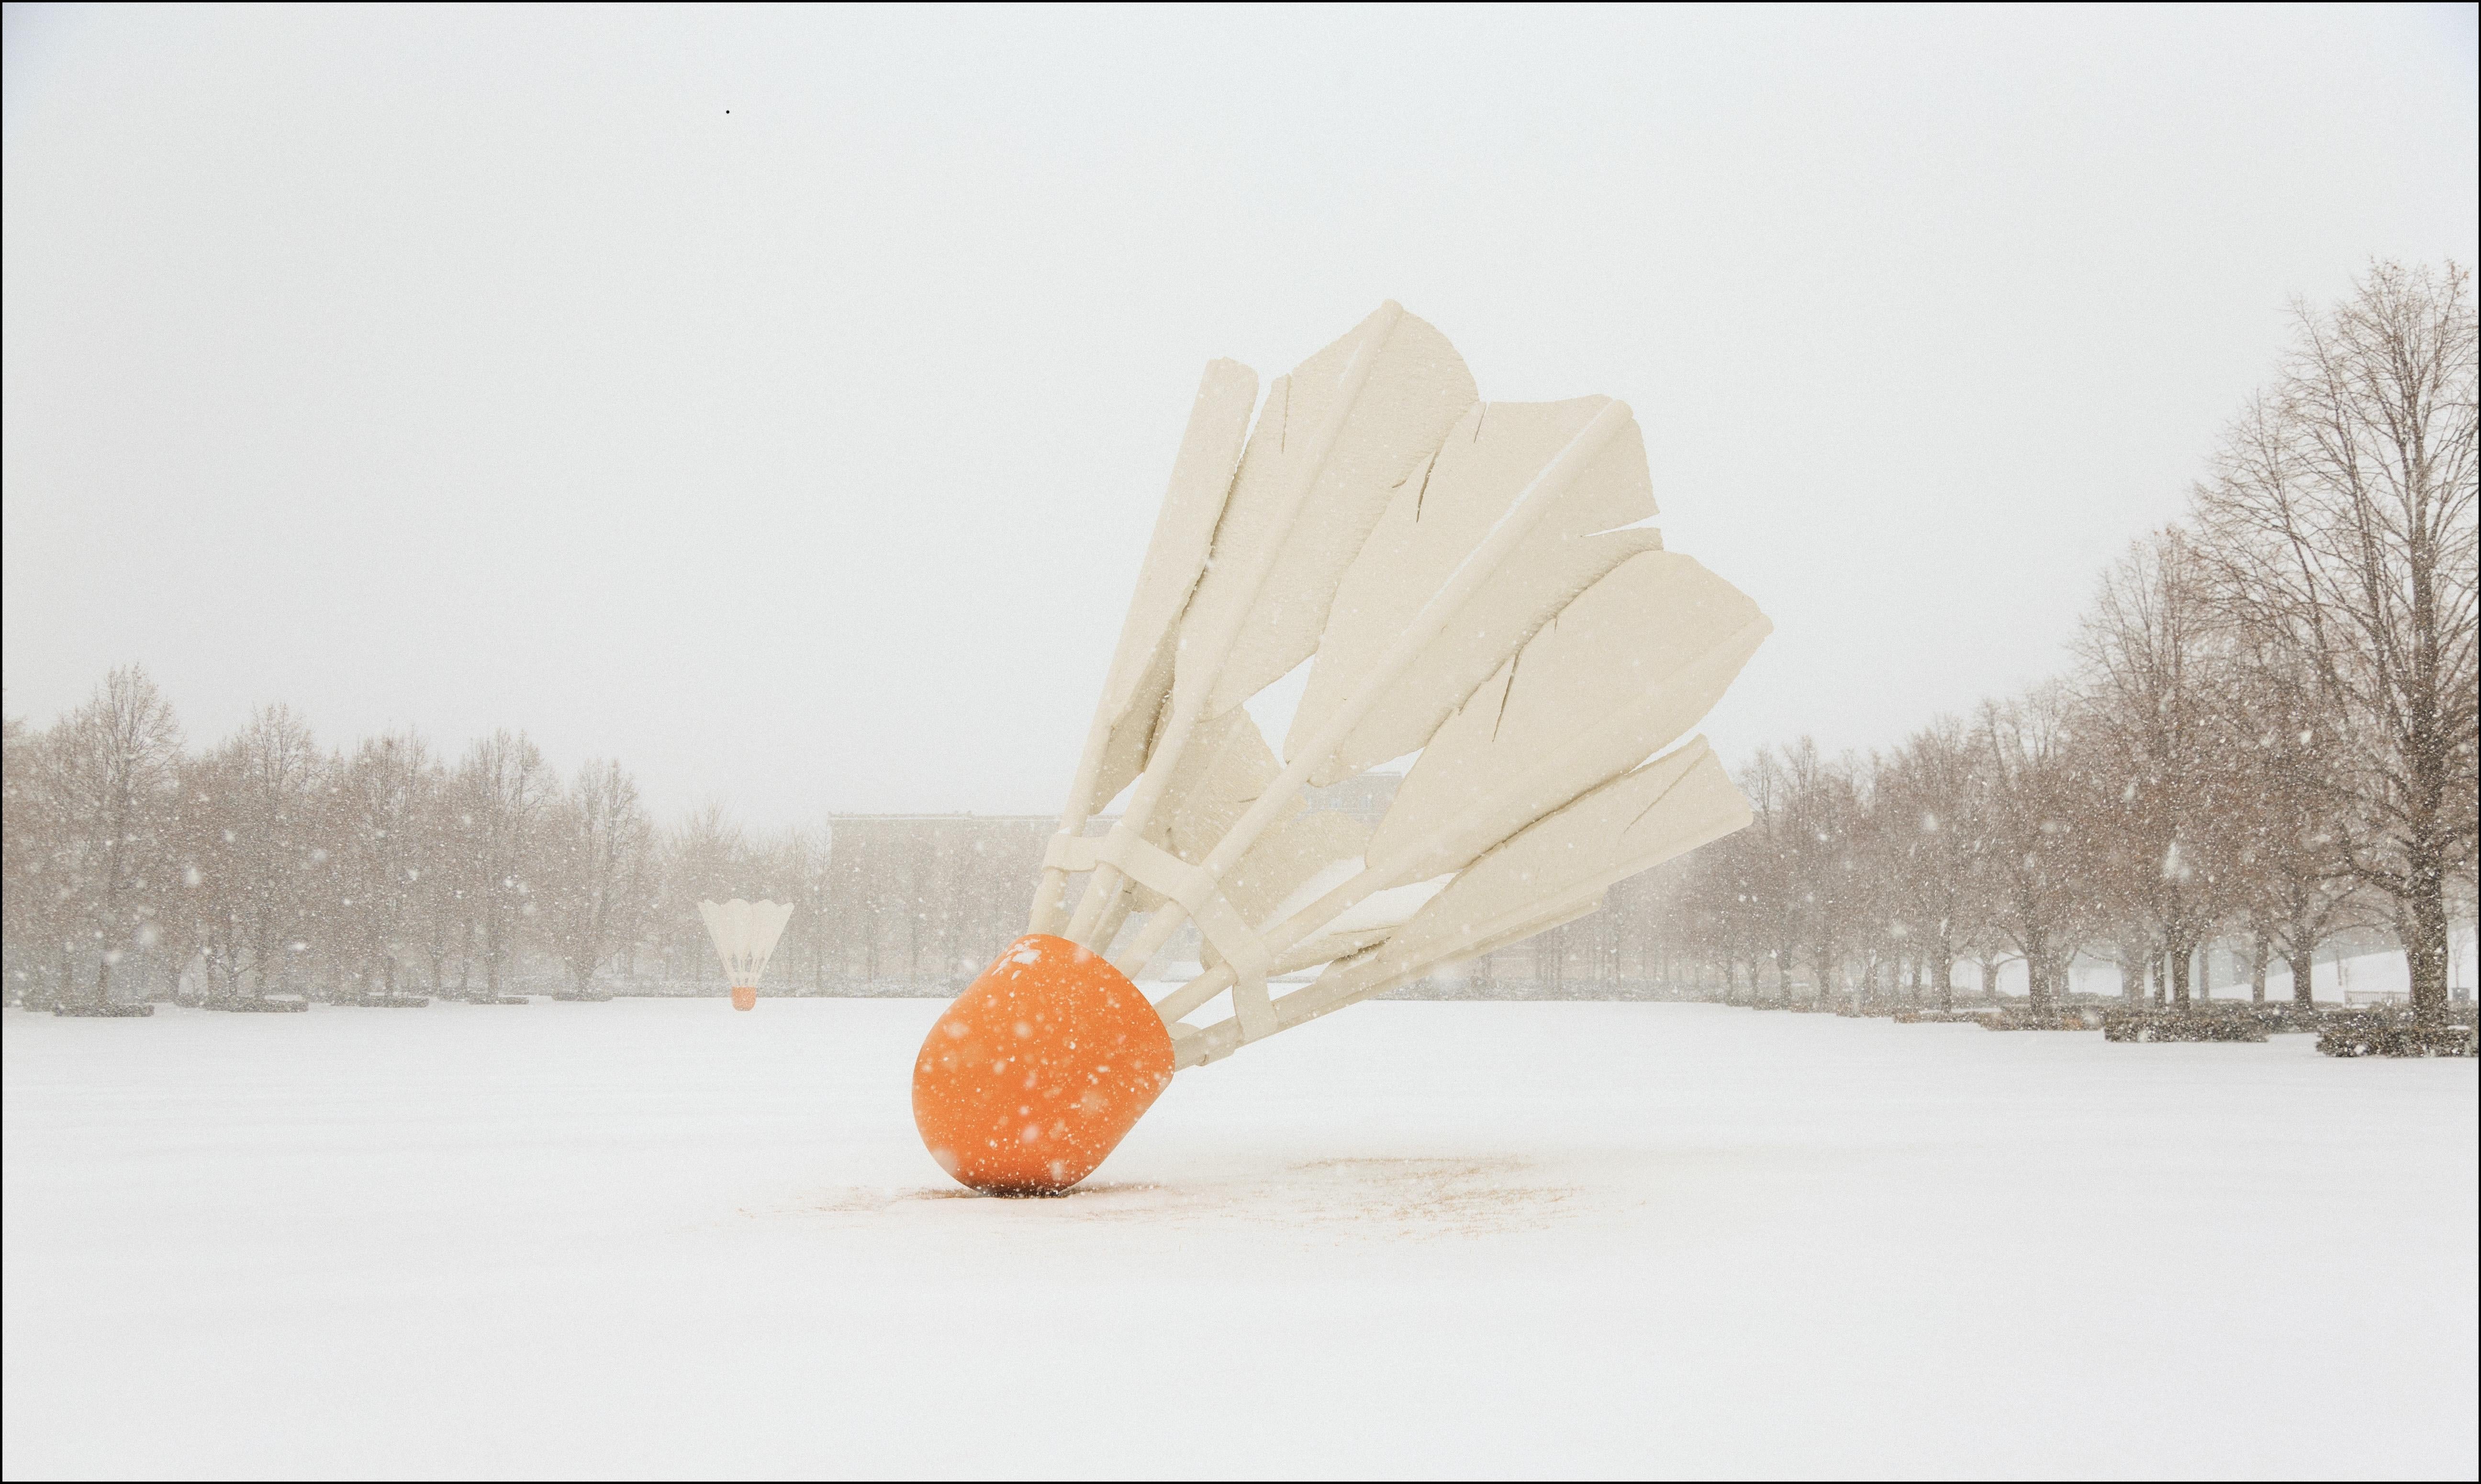 Nick Vedros Landscape Photograph - Shuttlecocks in Snow